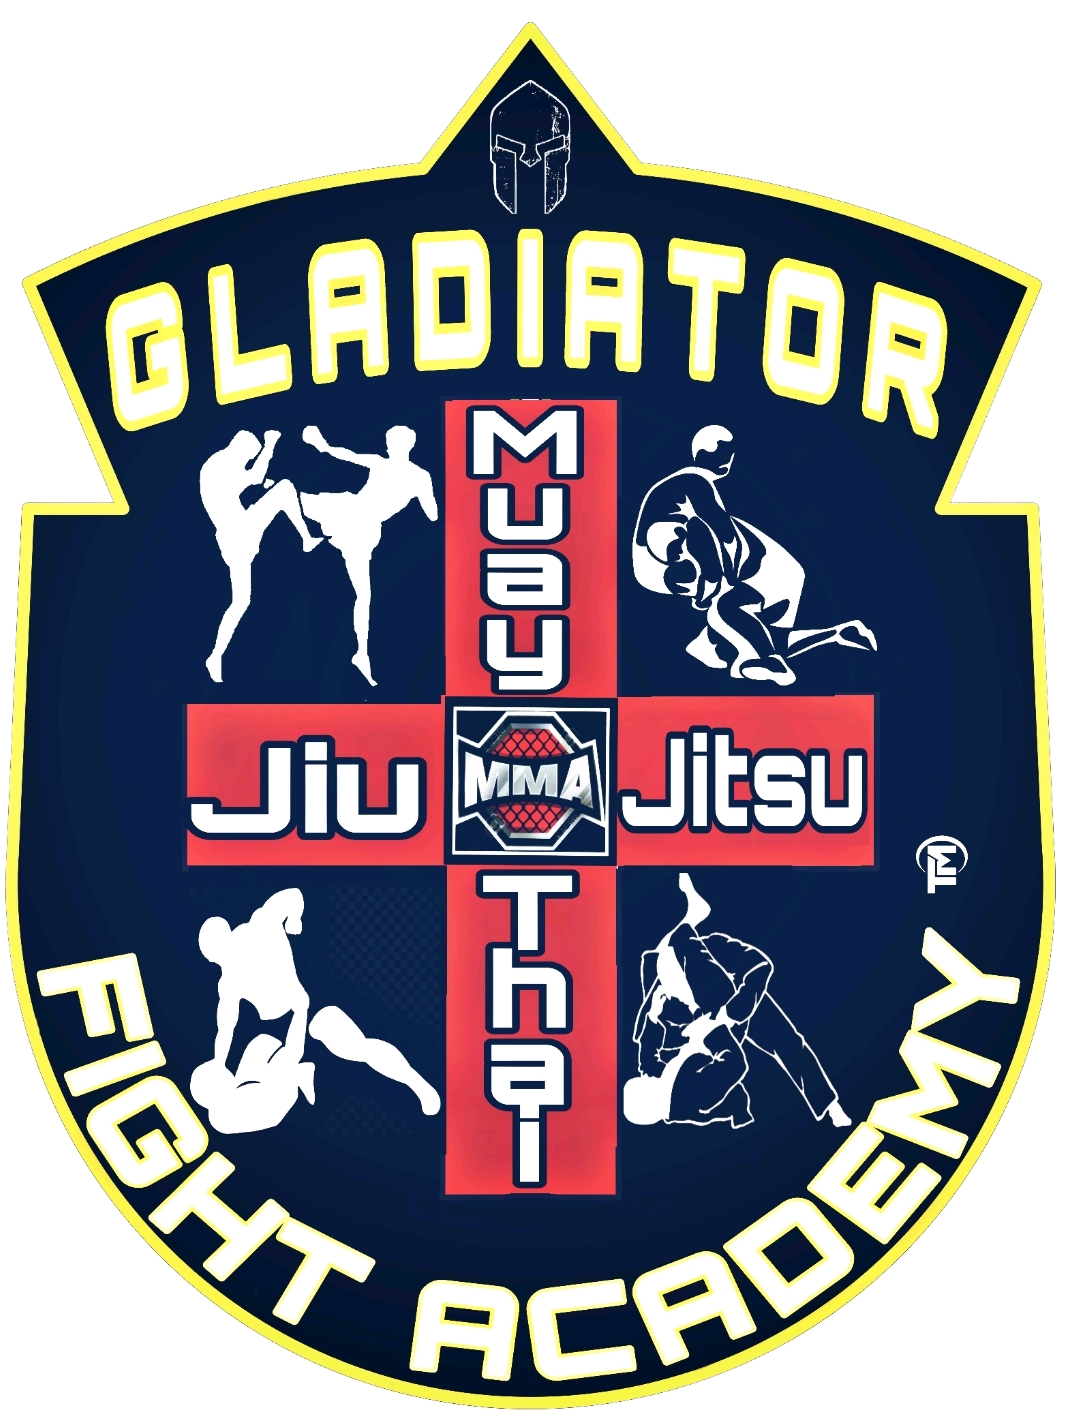 Gladiator Fight Academy